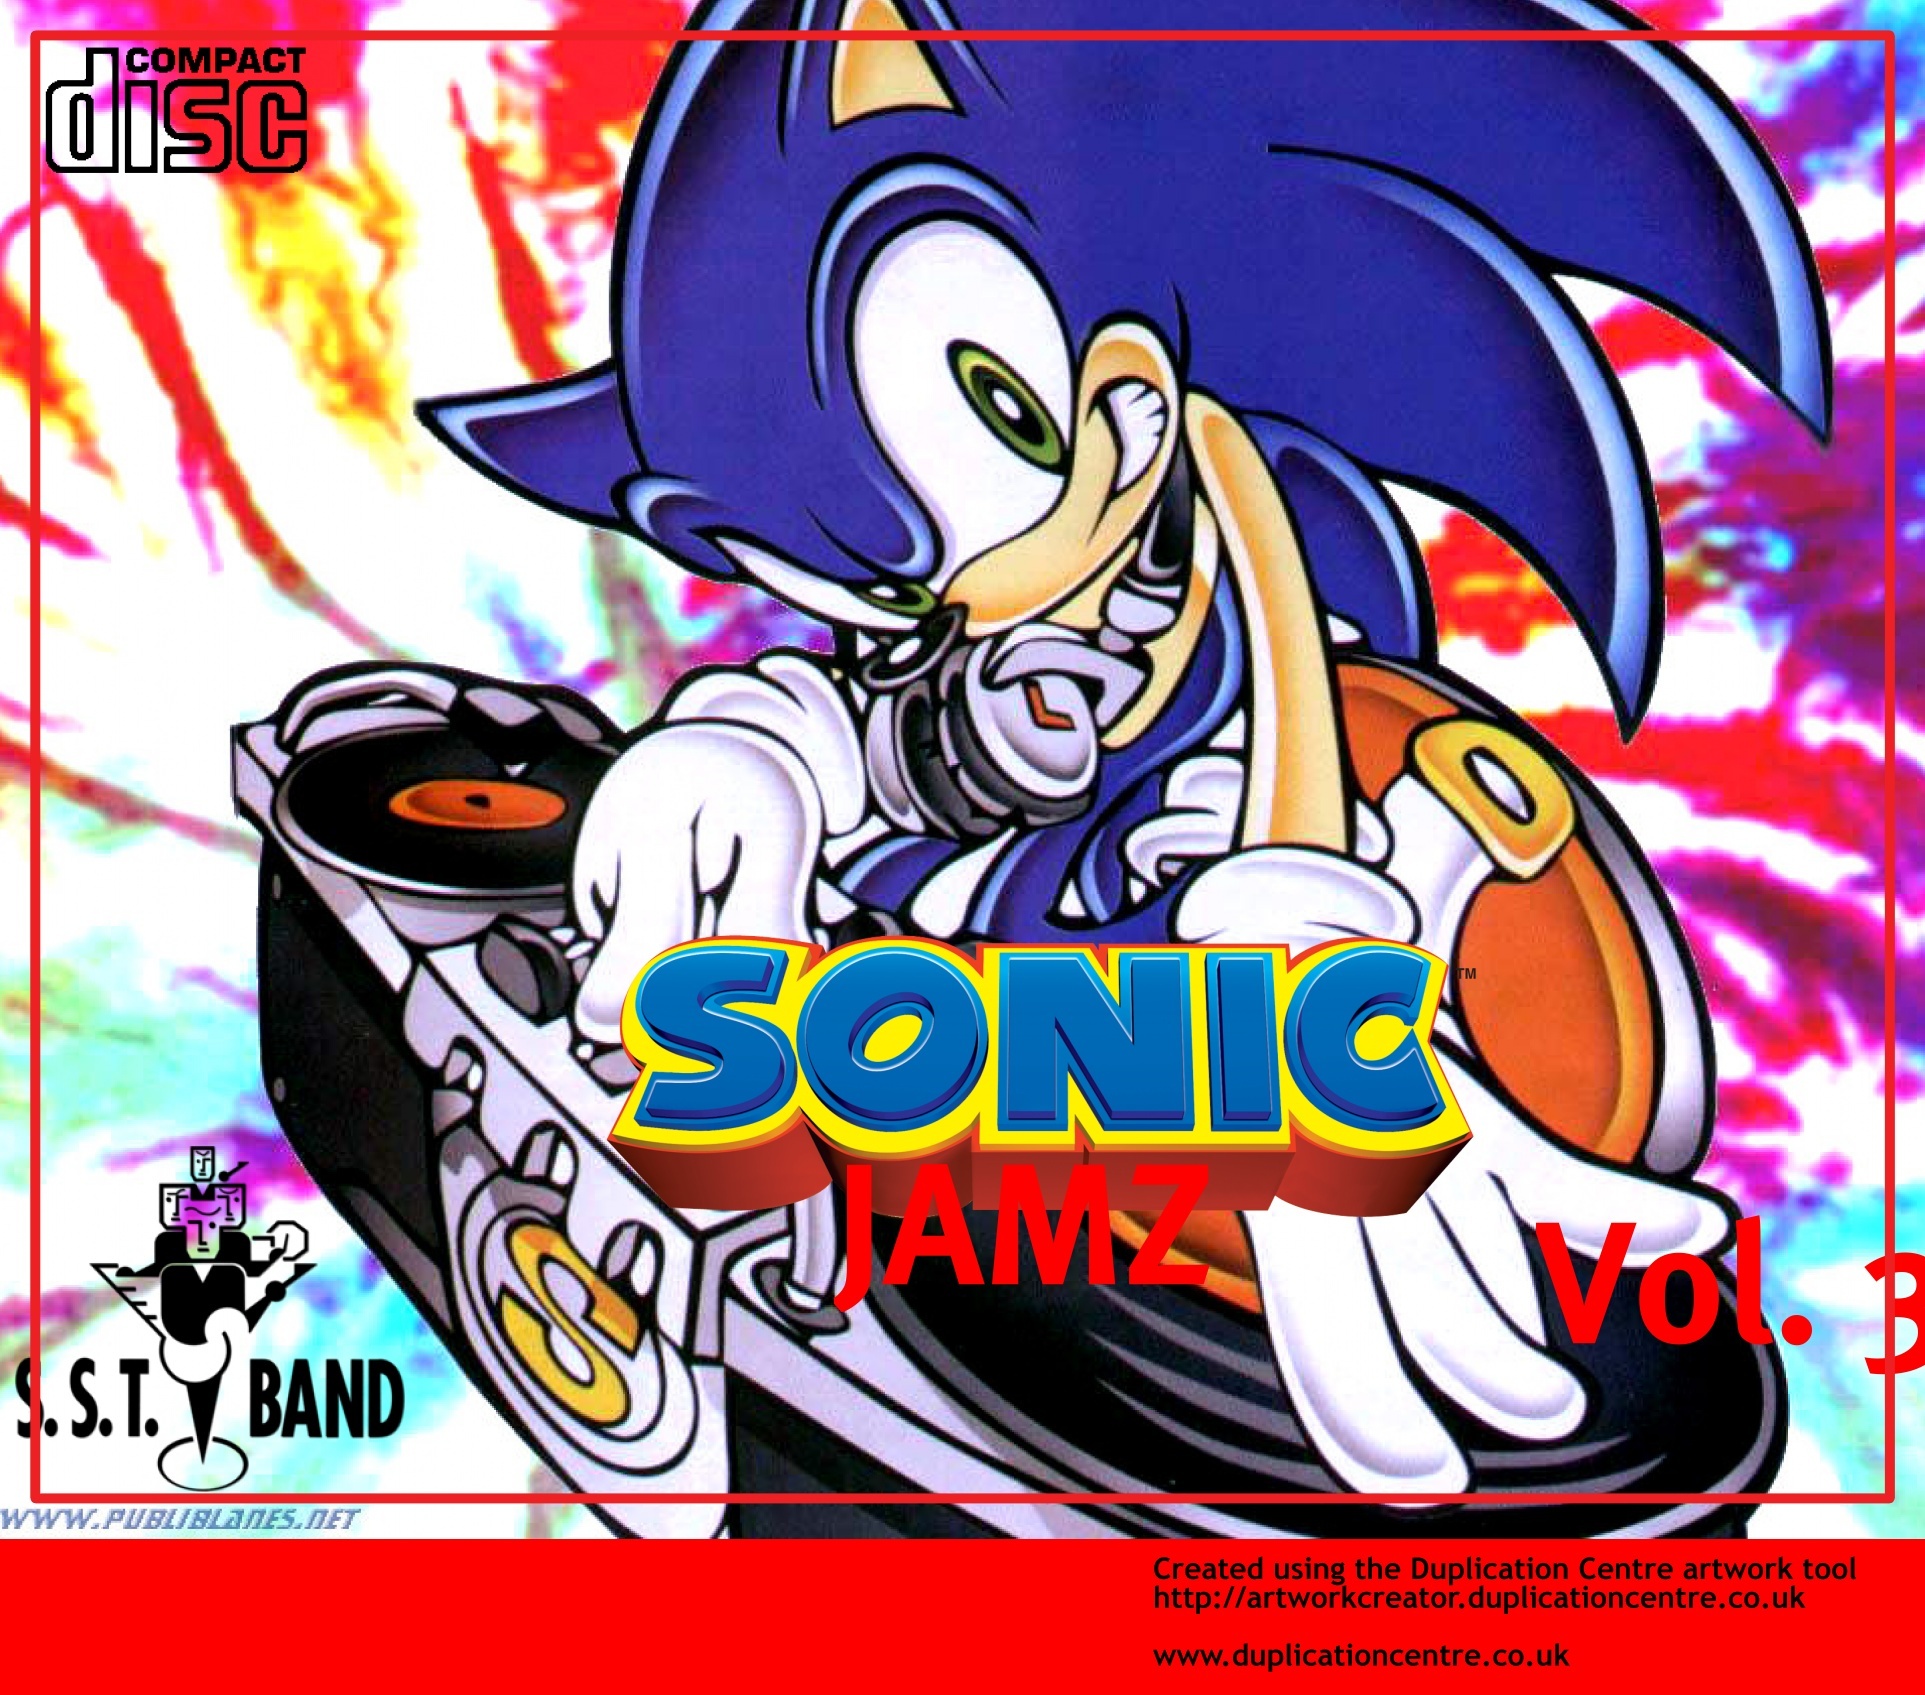 Sonic Jamz Vol. 3 box cover